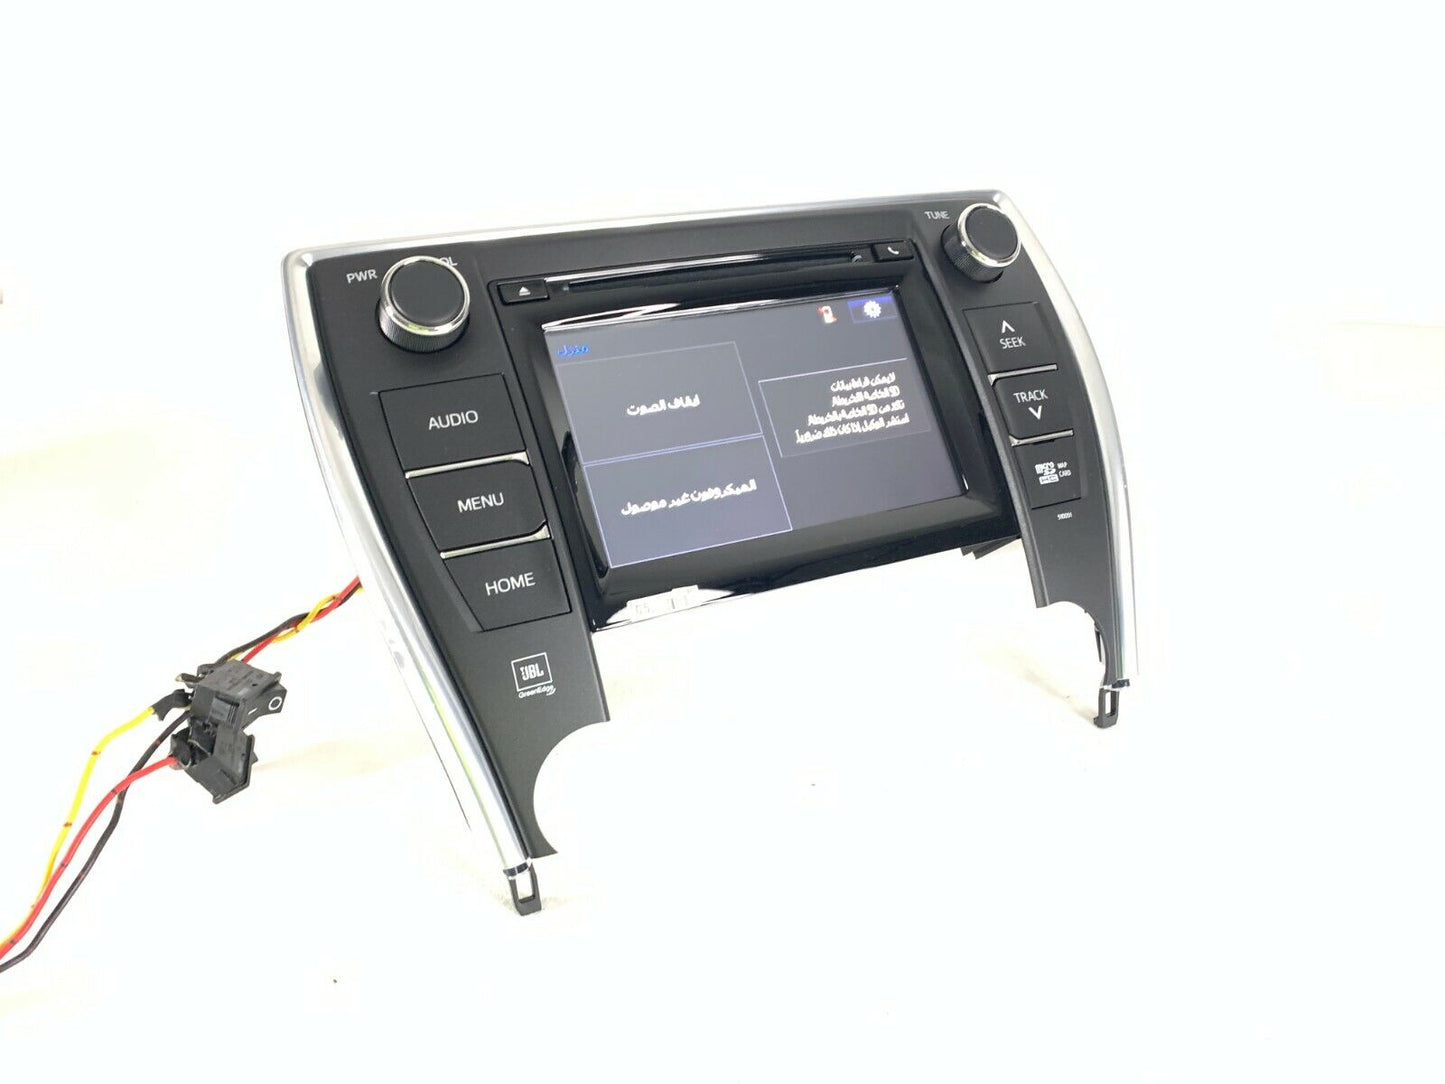 15-17 TOYOTA Camry JBL navigation GPS RADIO OEM  faceplate 510051 86804-06120